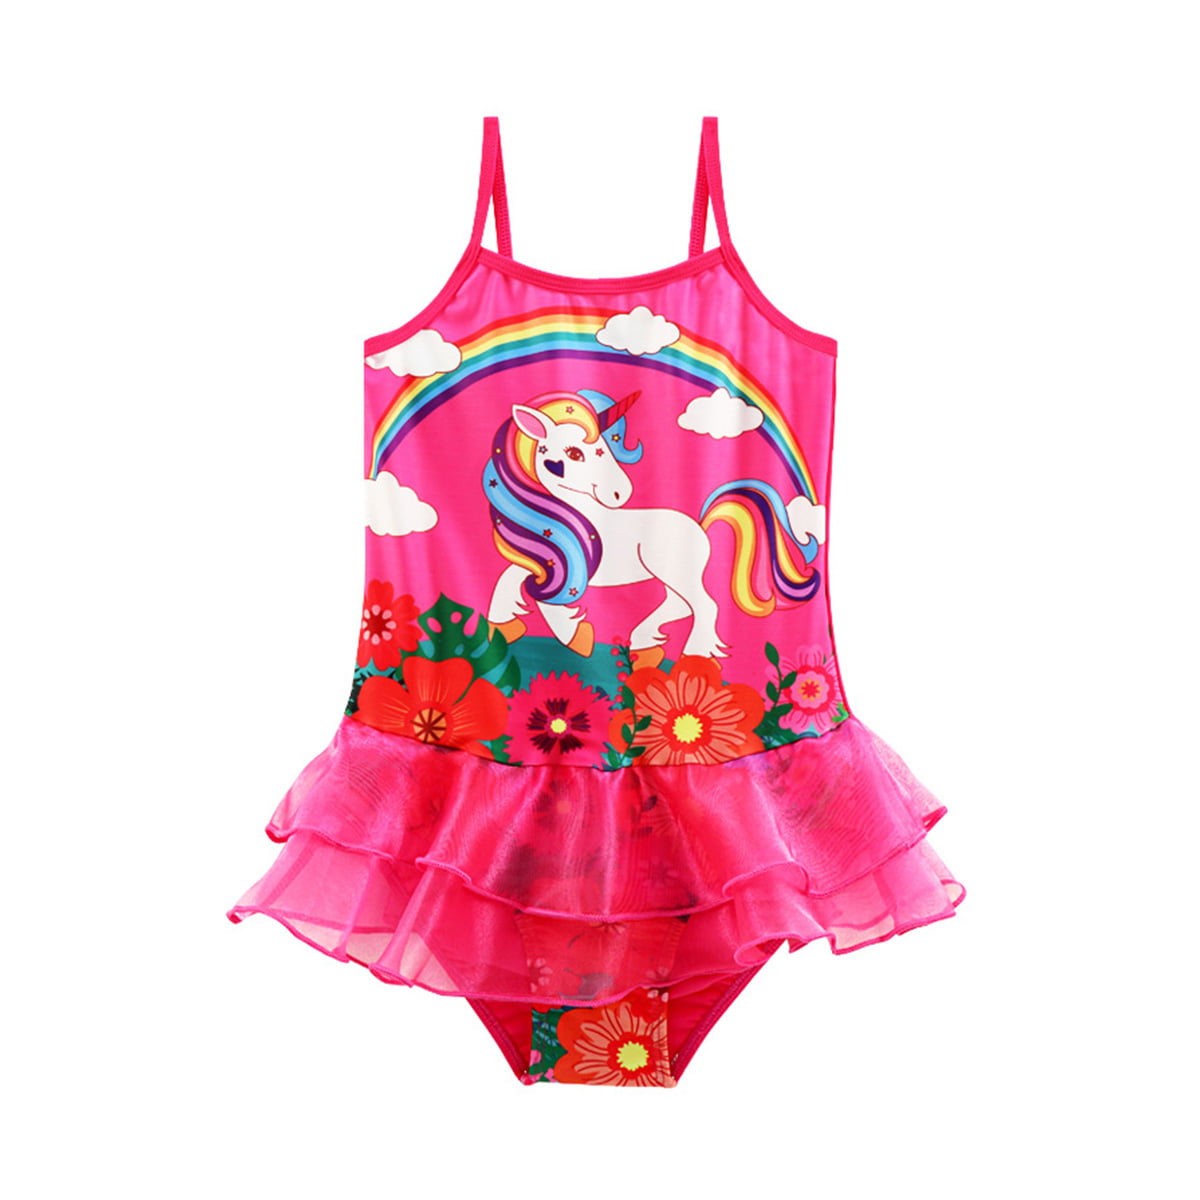 Newborn Infant Baby Girls Cute Unicorn Swimsuit Rainbow Bathing Suit Sleeveless Floral Bikini Swimsuit One Piece Clothes